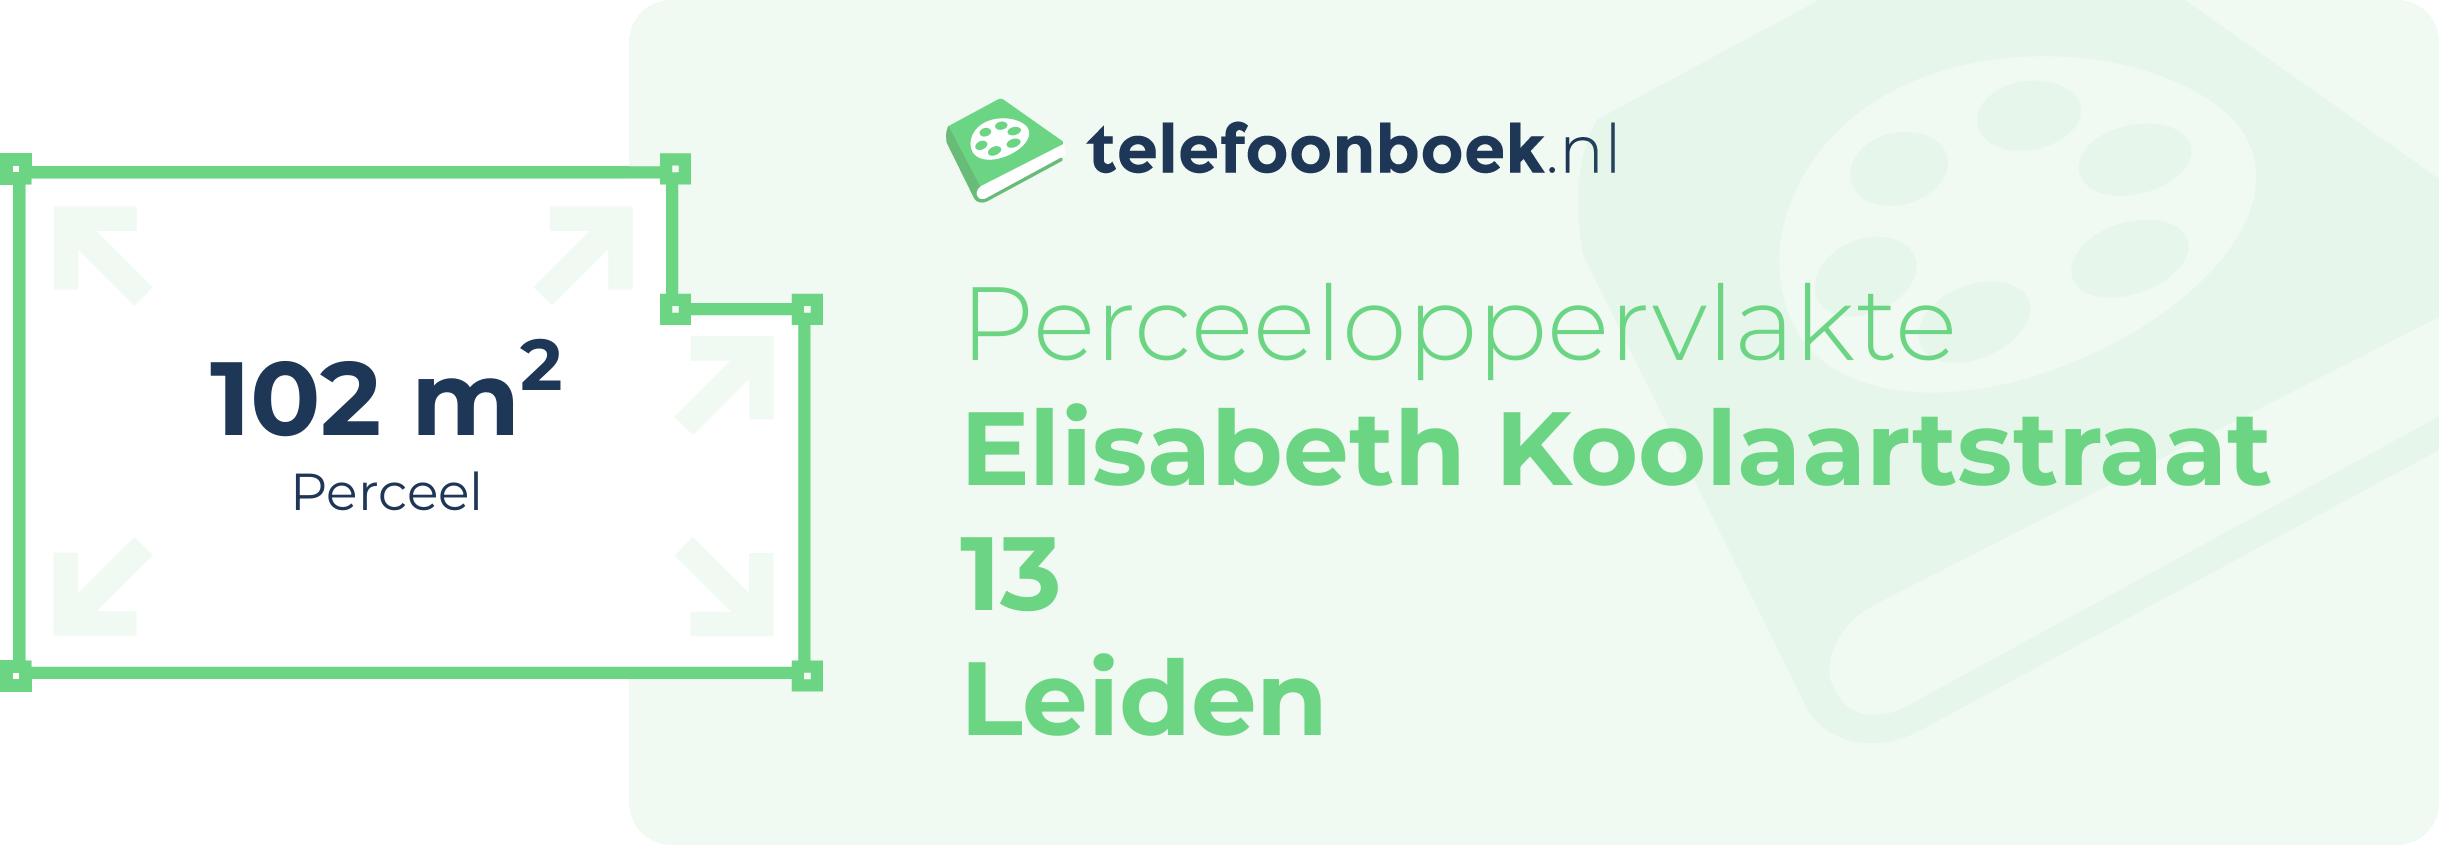 Perceeloppervlakte Elisabeth Koolaartstraat 13 Leiden